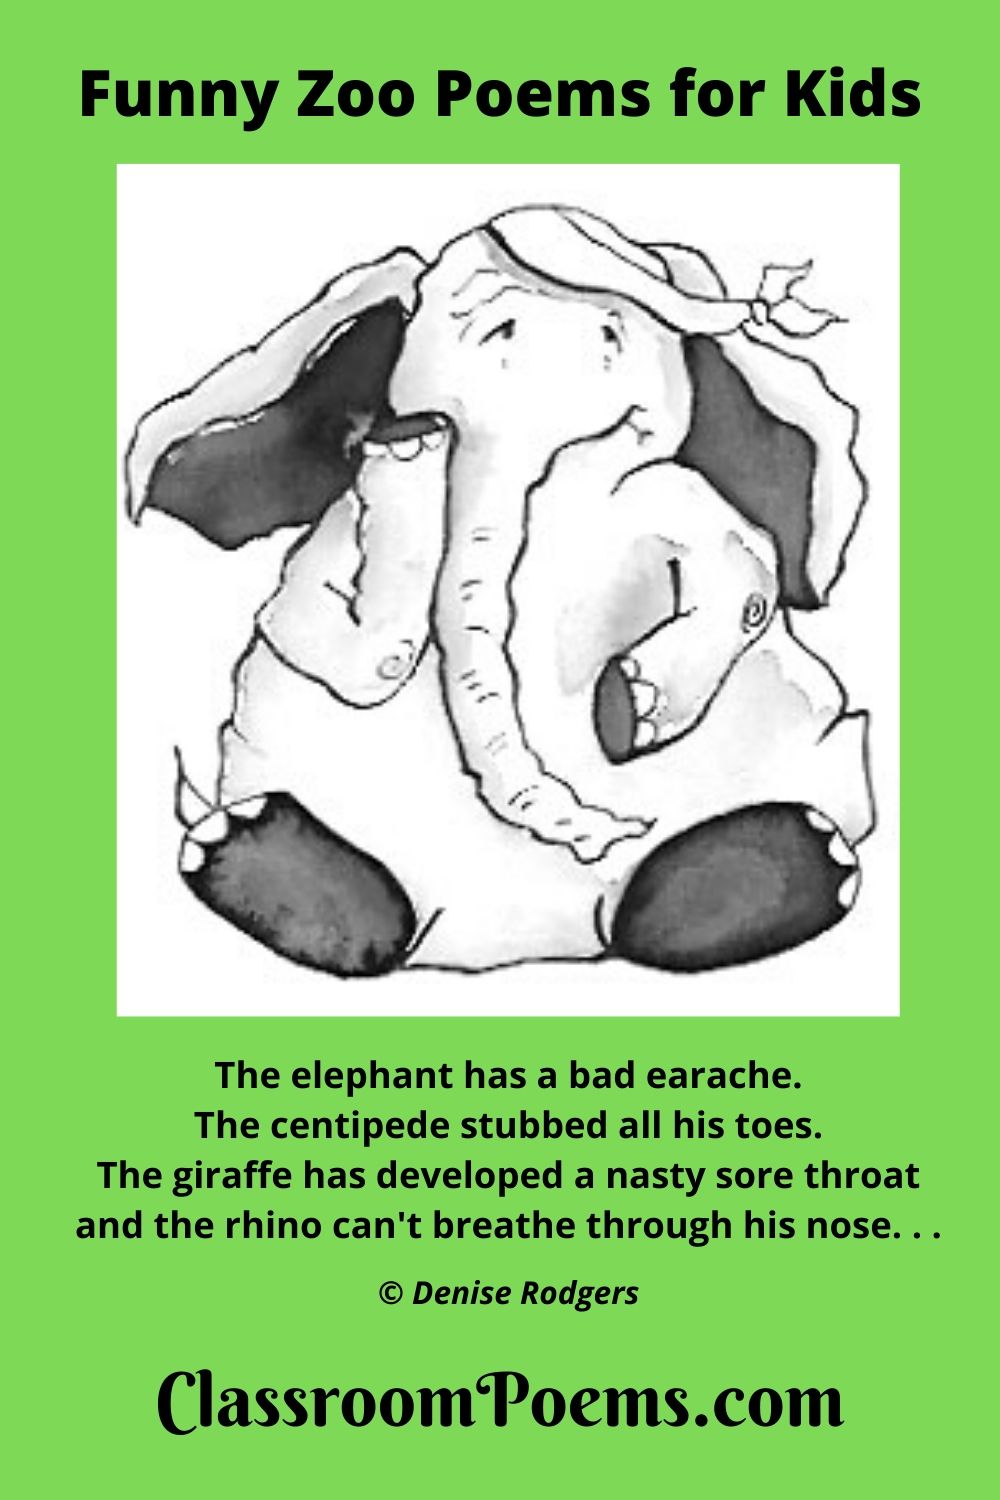 Elephant poem. Elephant with earache.Funny elephant poem by Denise Rodgers on ClassroomPoems.com.